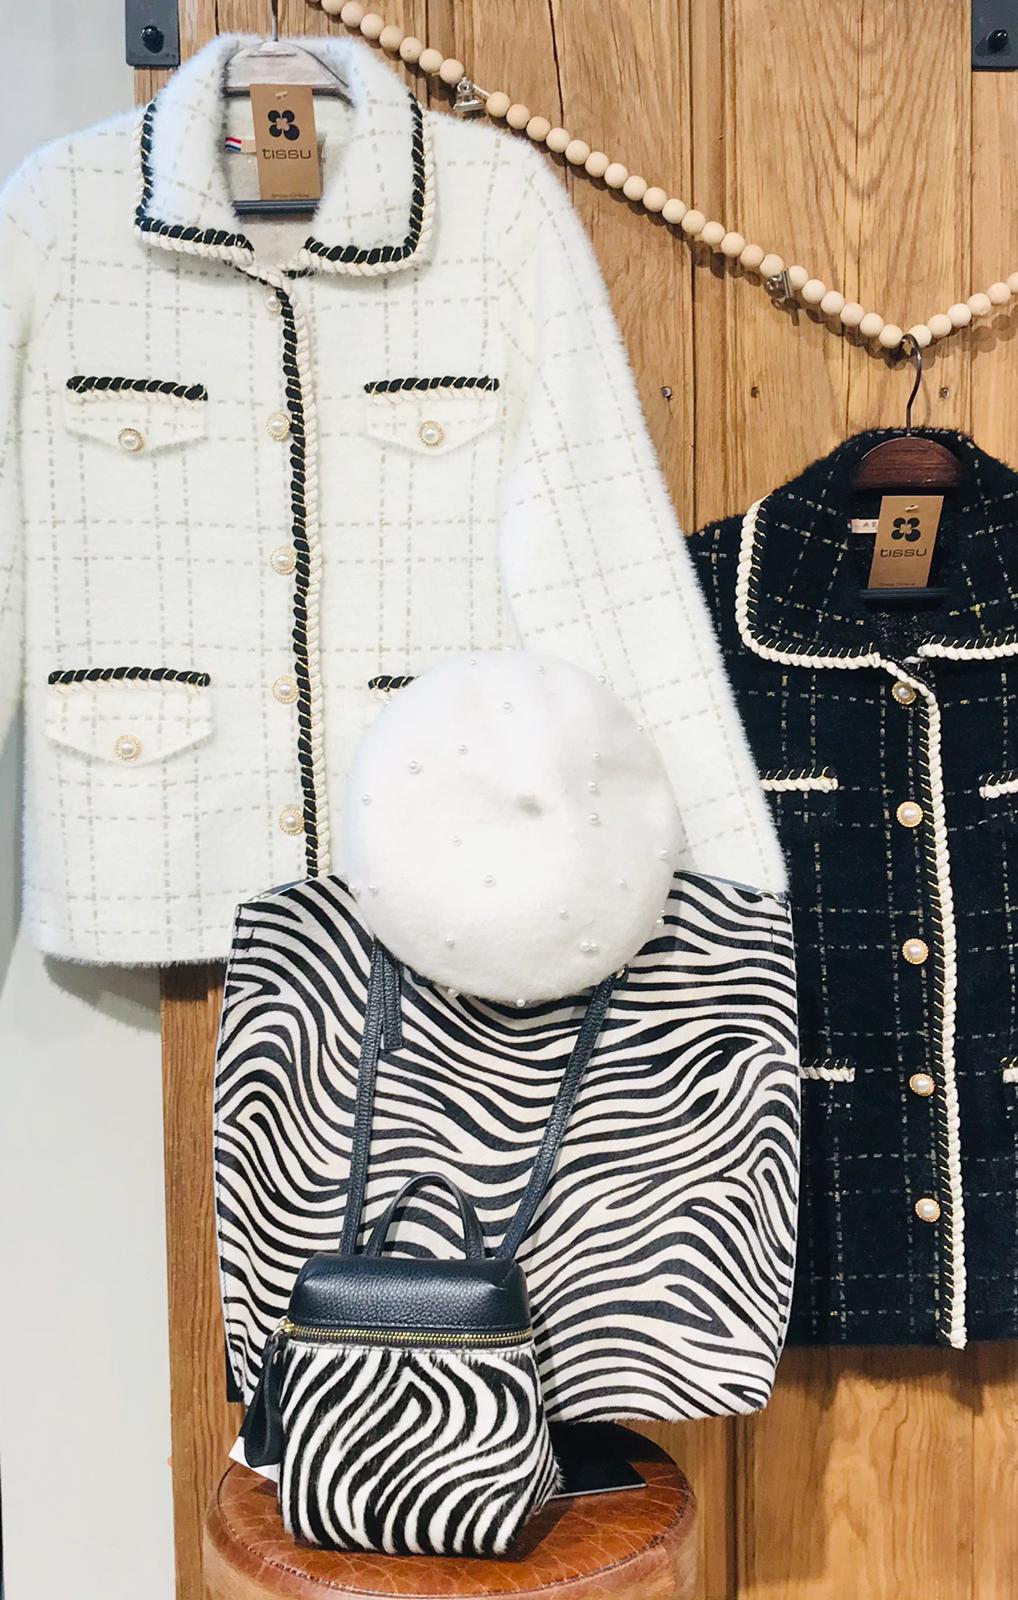 Fahrenheit patrimonio ingeniero Chaqueta estilo Chanel botones perlas y textura extra-soft. Talla Unica. |  tissu moda